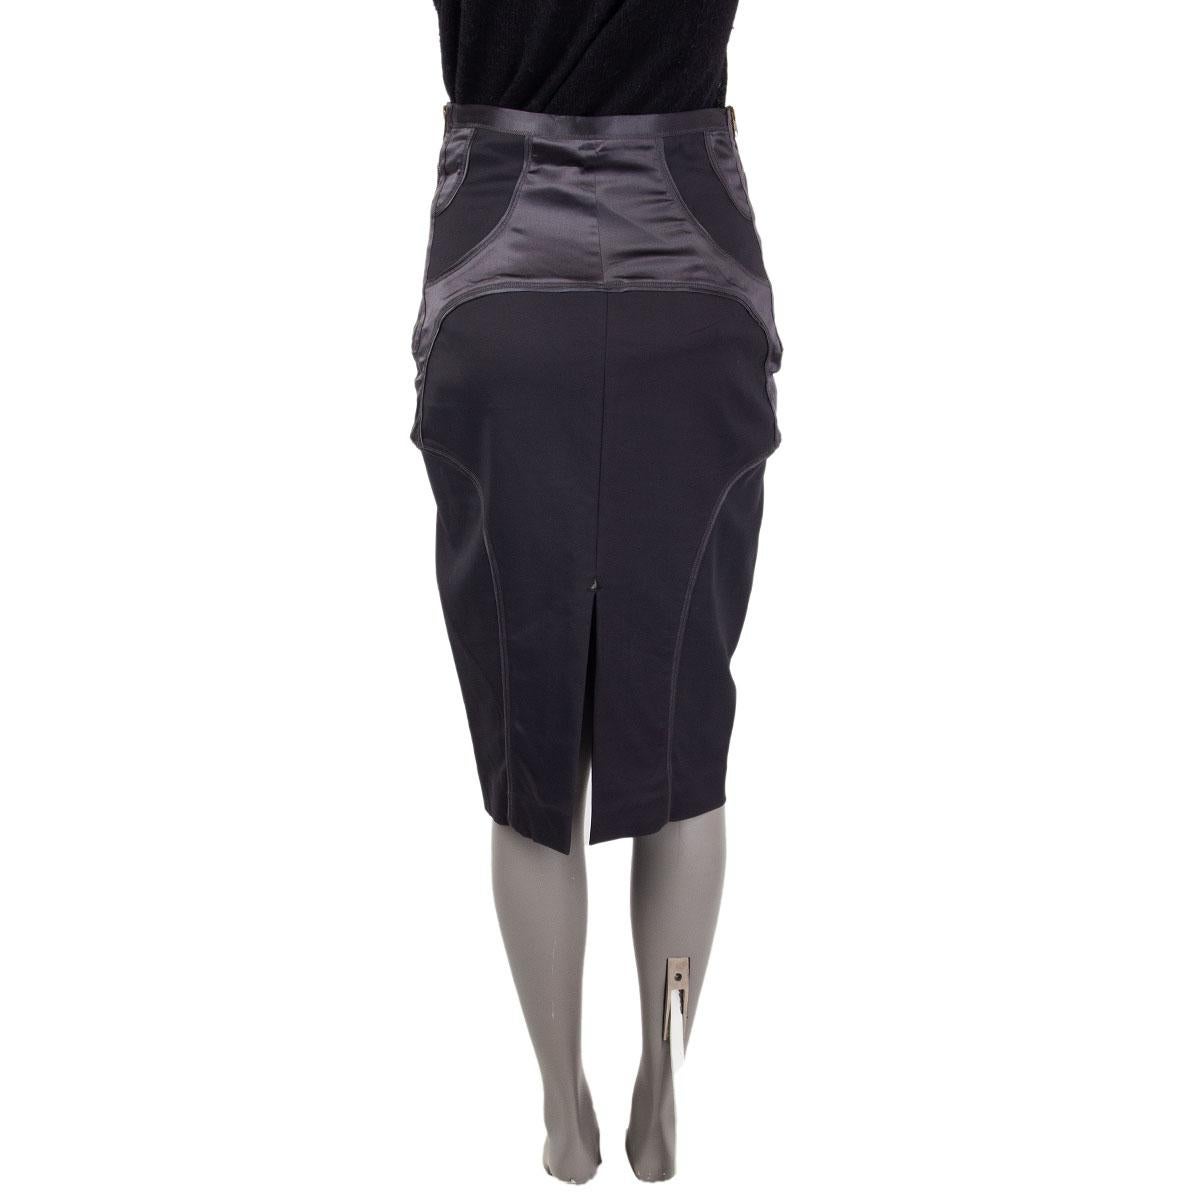 Black GUCCI grey SATIN PANELED PENCIL Skirt 42 M